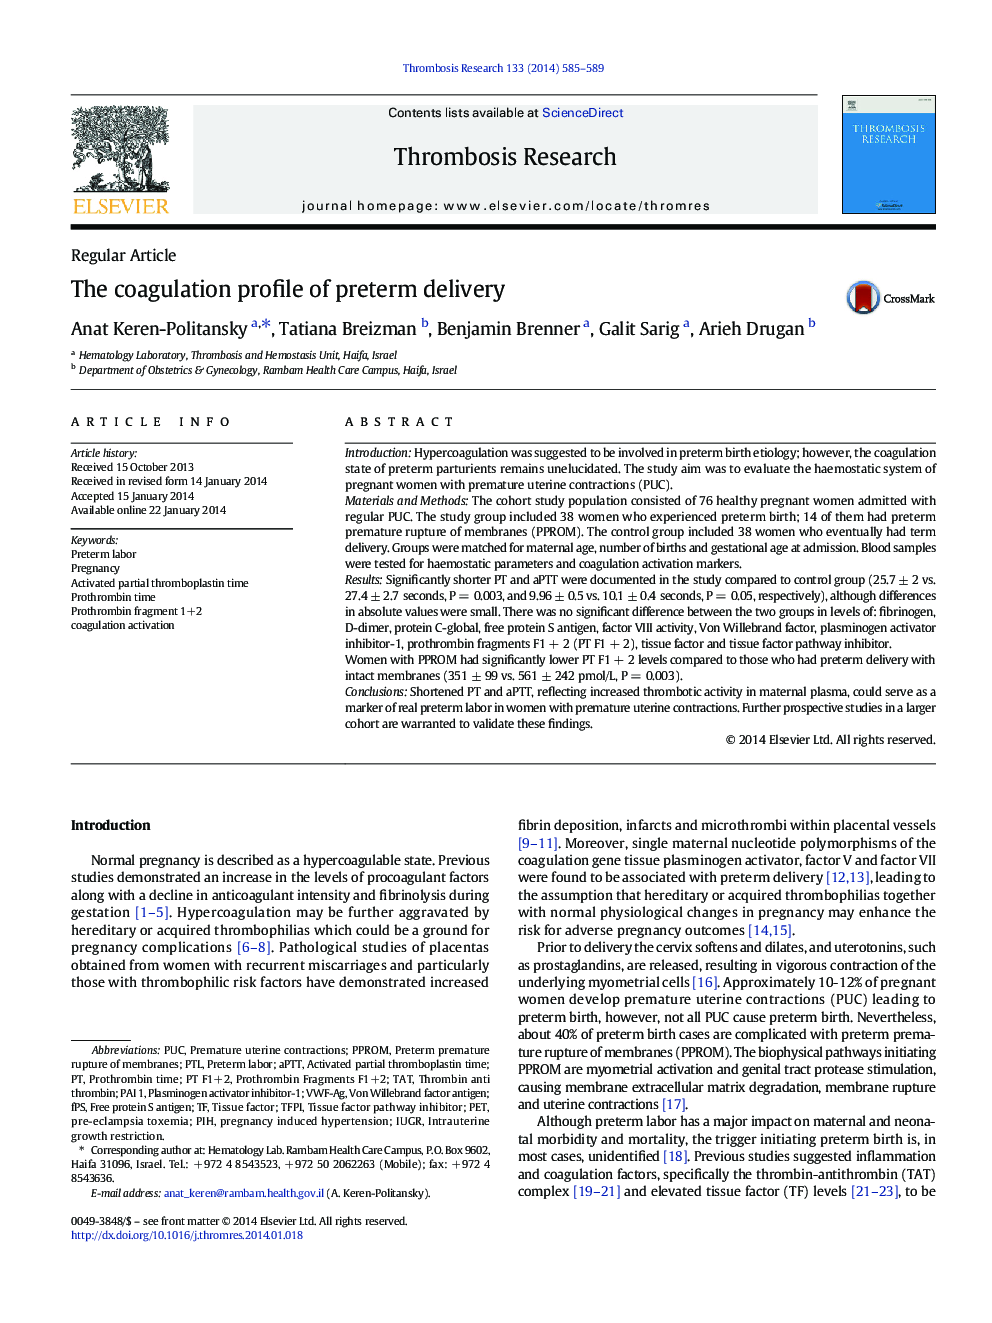 The coagulation profile of preterm delivery